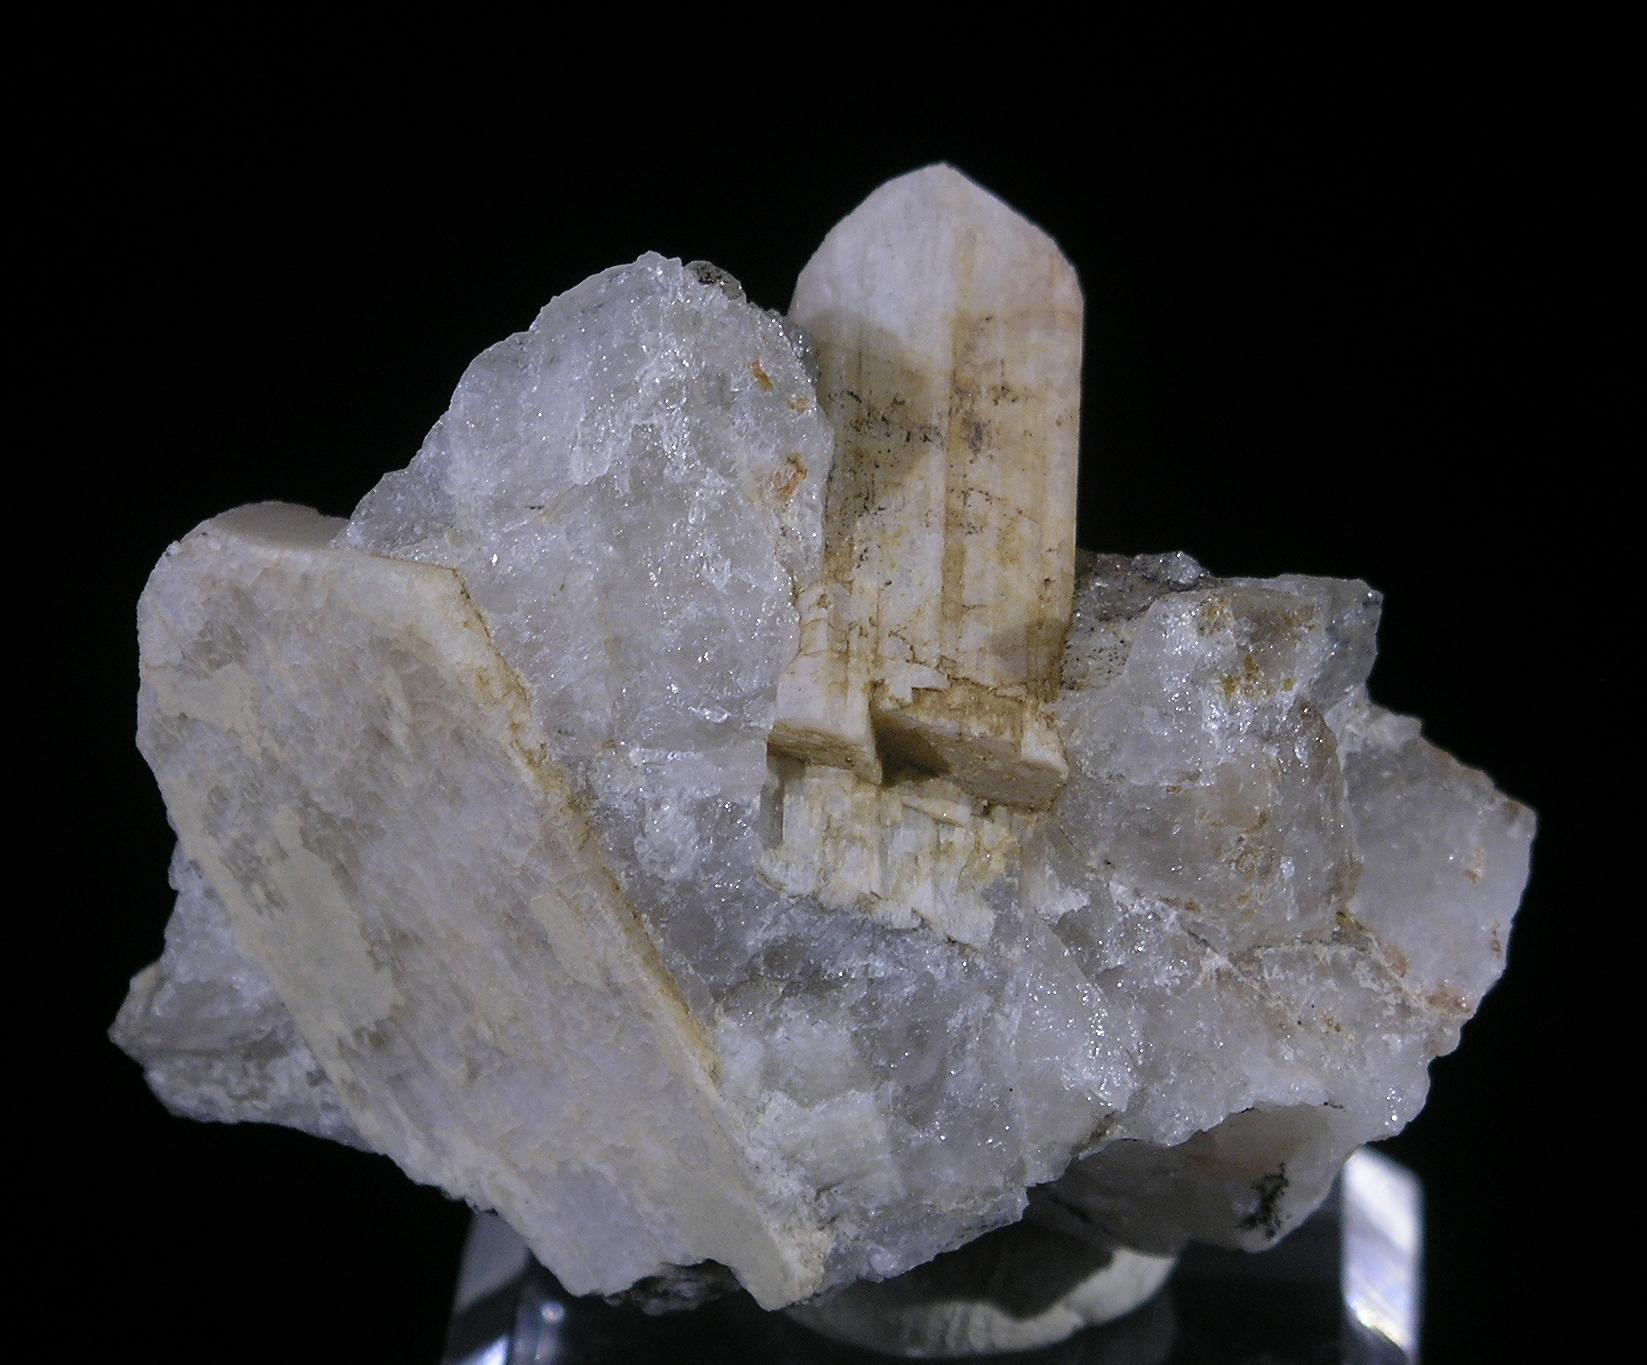 Spodumene crystals Brazil Lake Nova Scotia